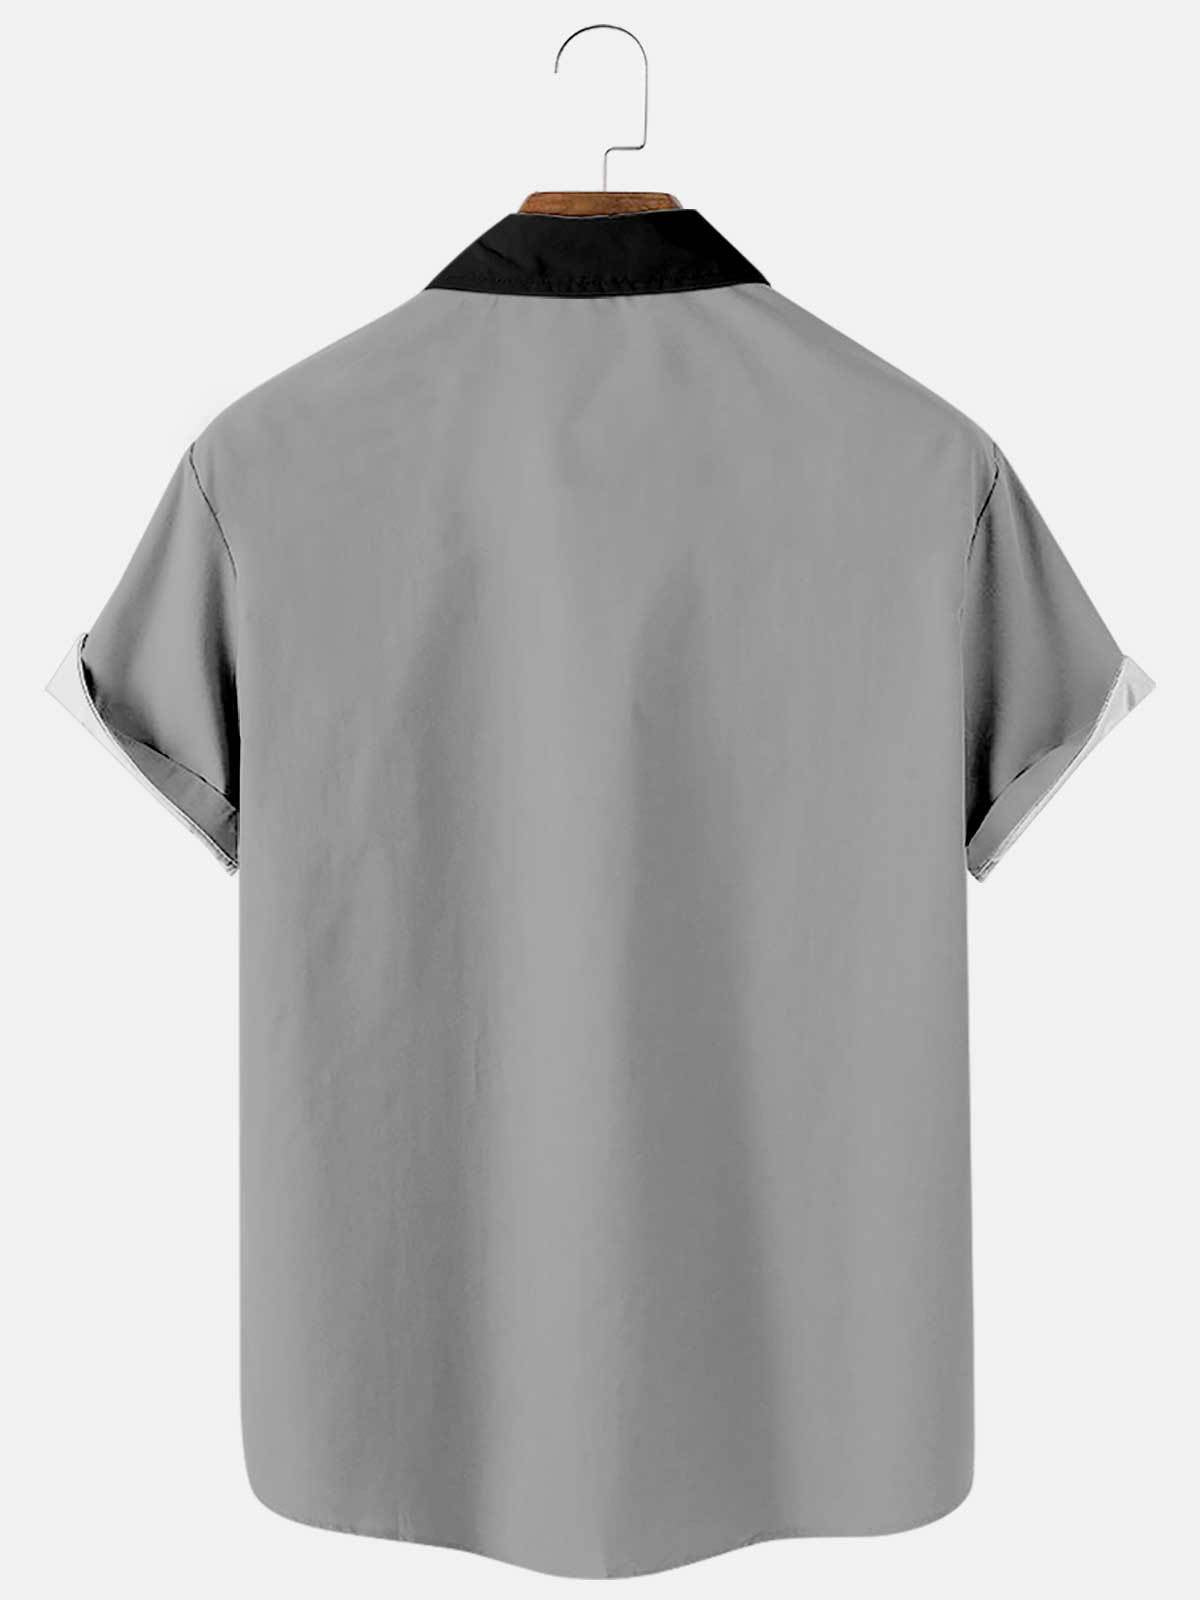 Black Lines Lapel Summer Casual Shirt for Men